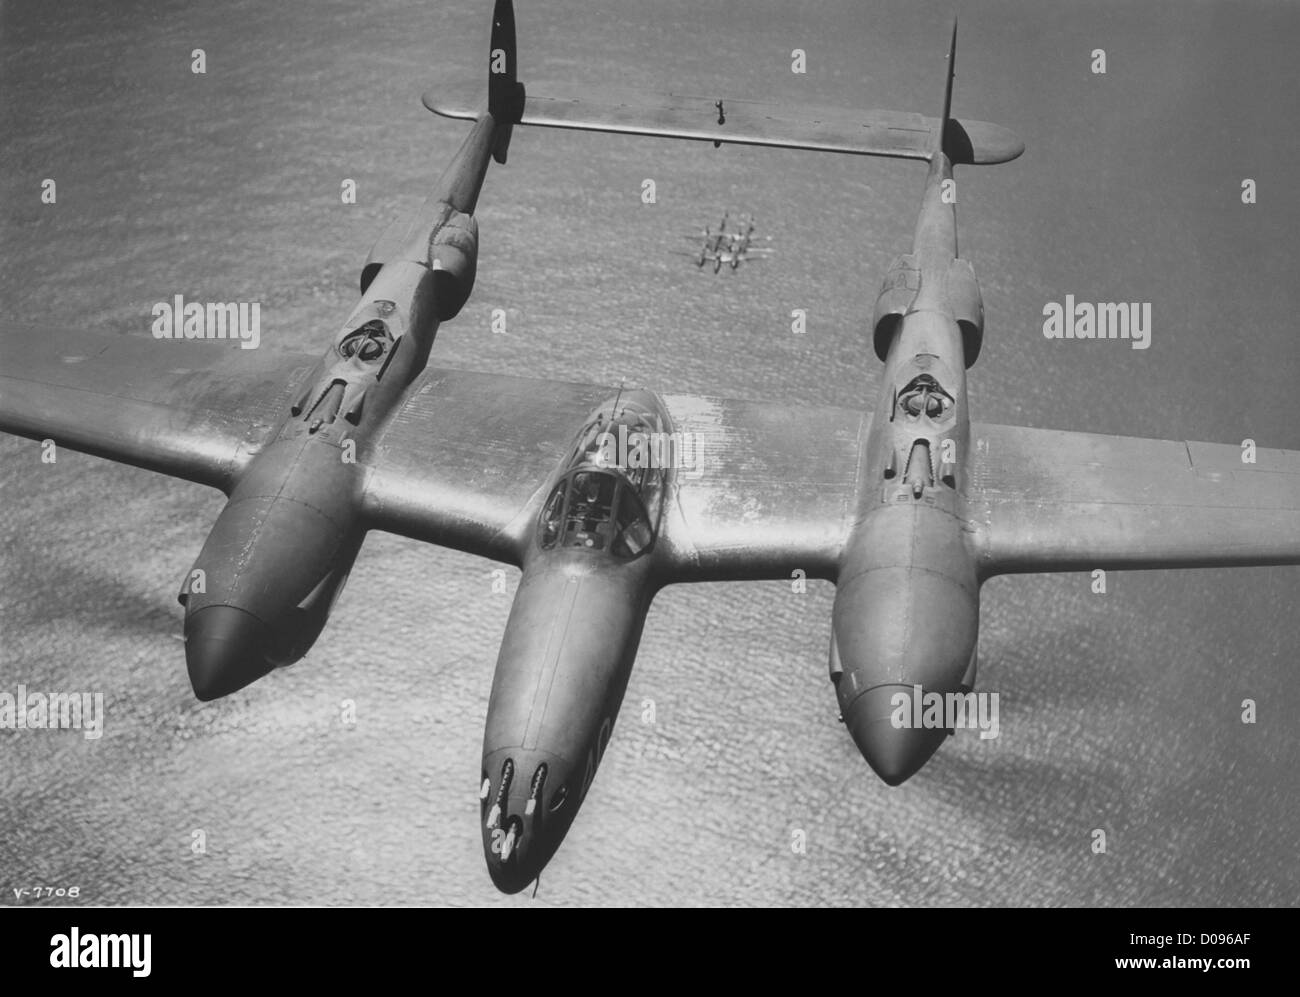 Rayo P-38 Foto de stock